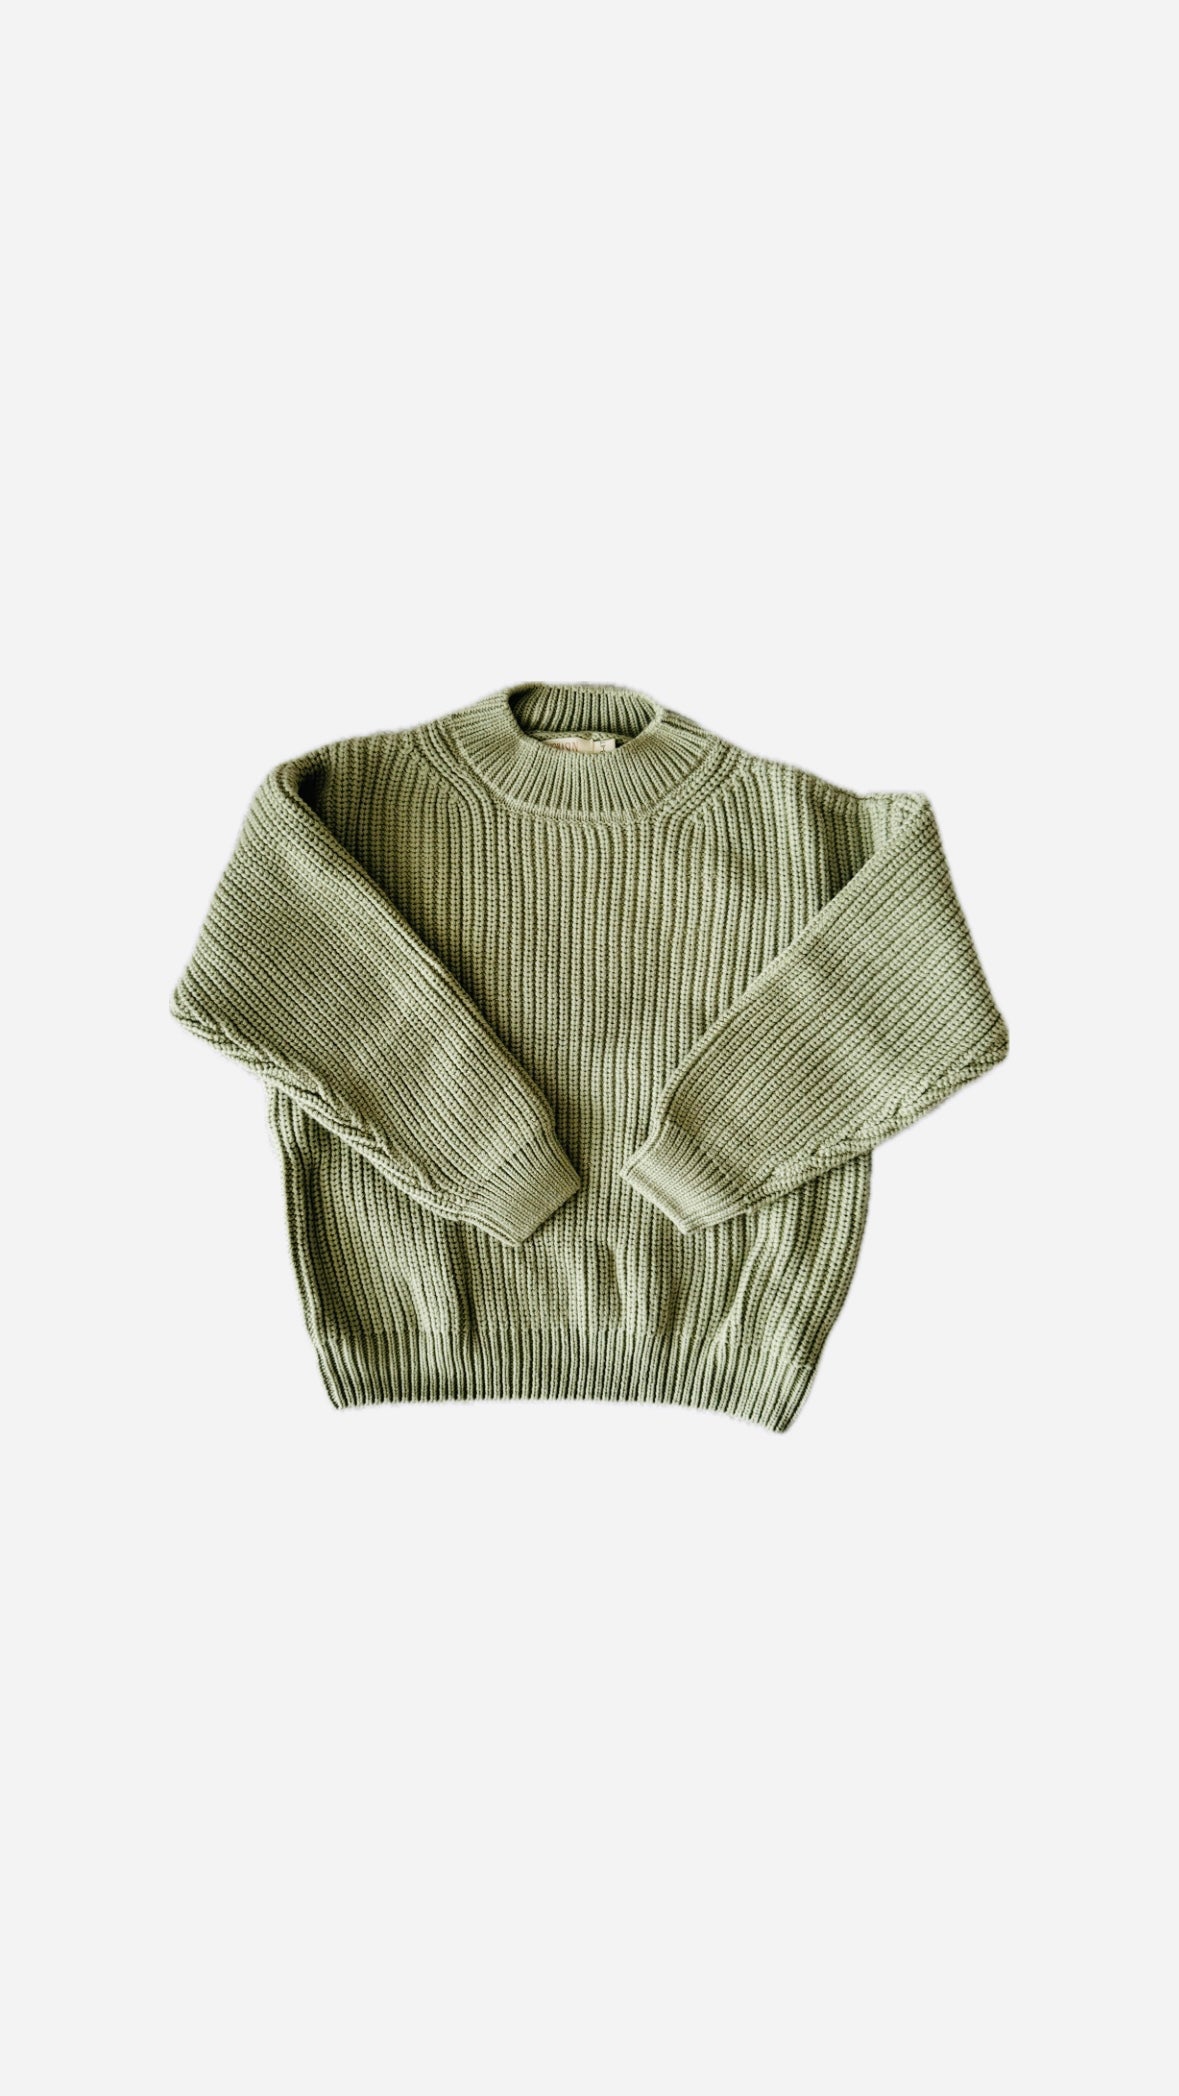 CLAY - Children's Custom Knit Sweater